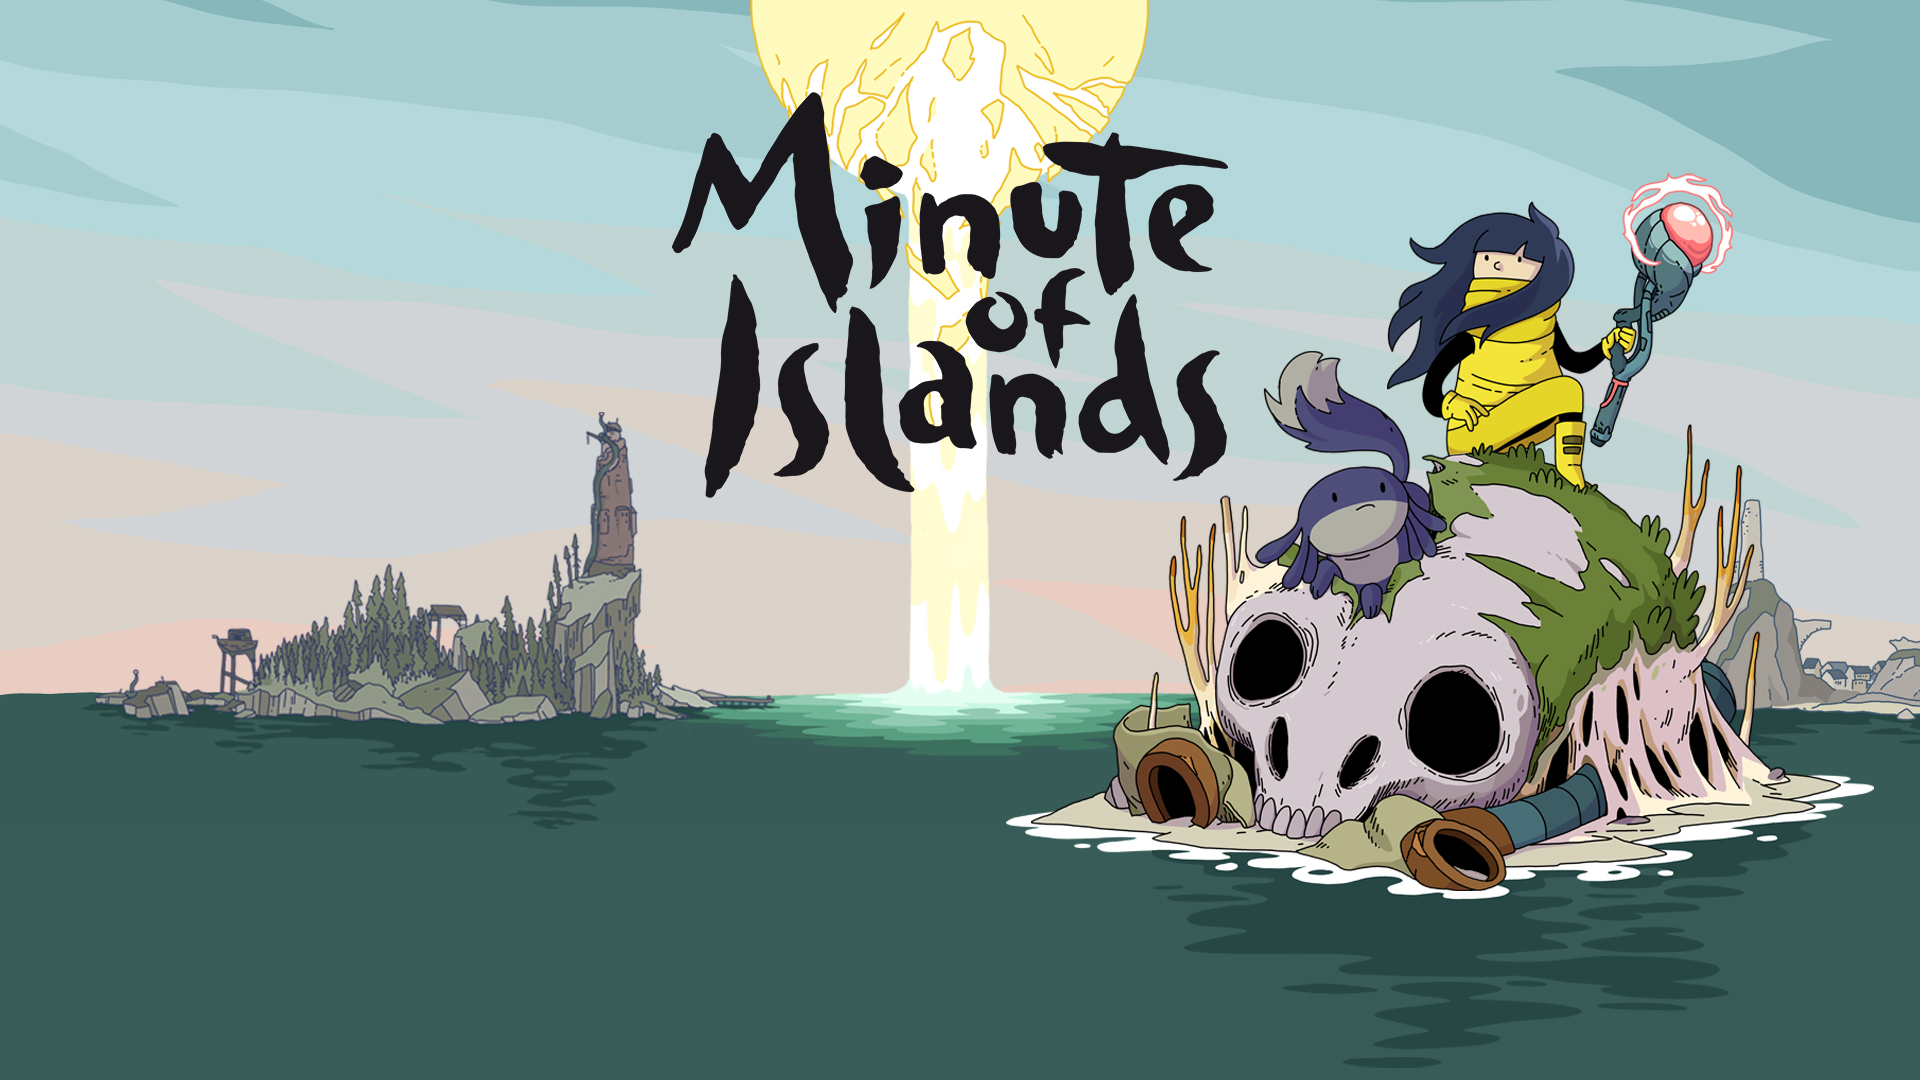 minute of islands steam